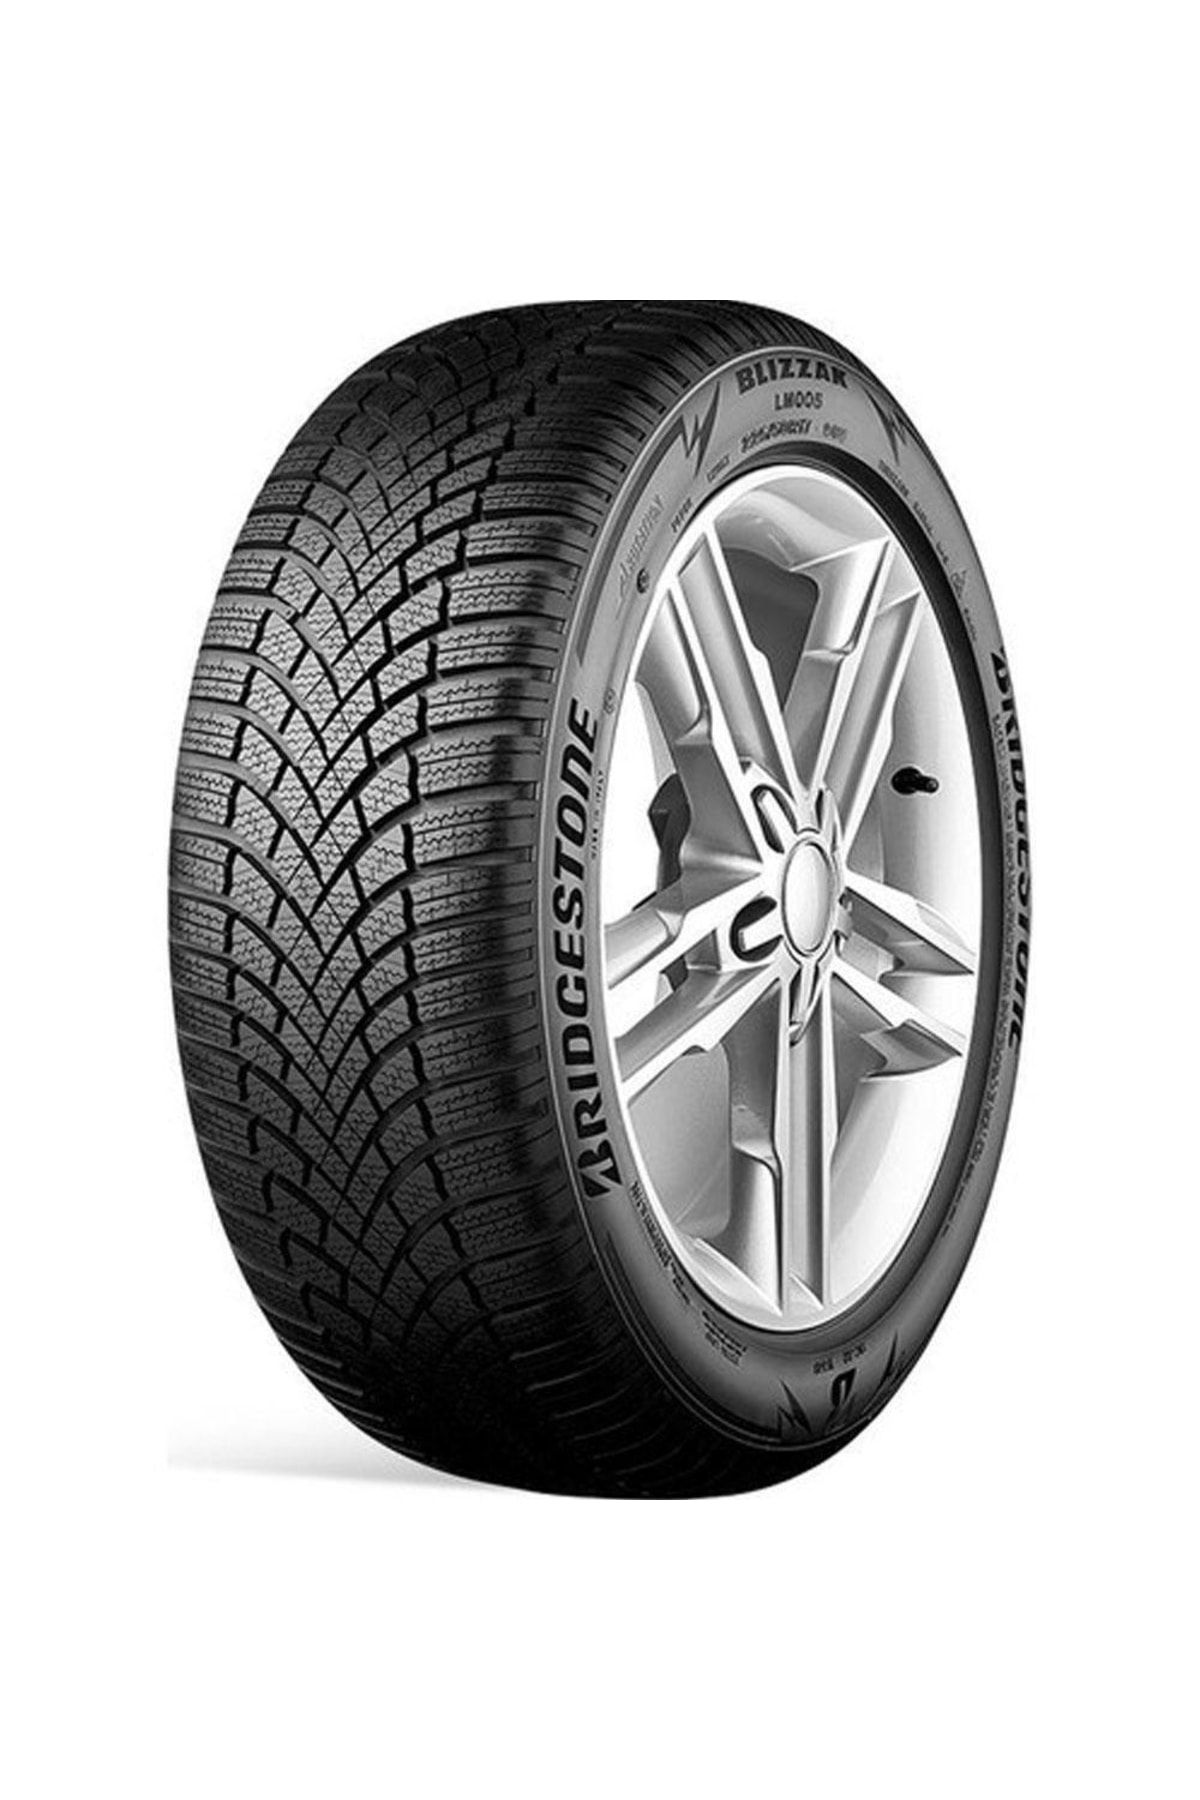 Bridgestone 245/45r18 100v Xl (rft) Blizzak Lm005 Driveguard Binek Kış Lastiği (2022 Üretim)